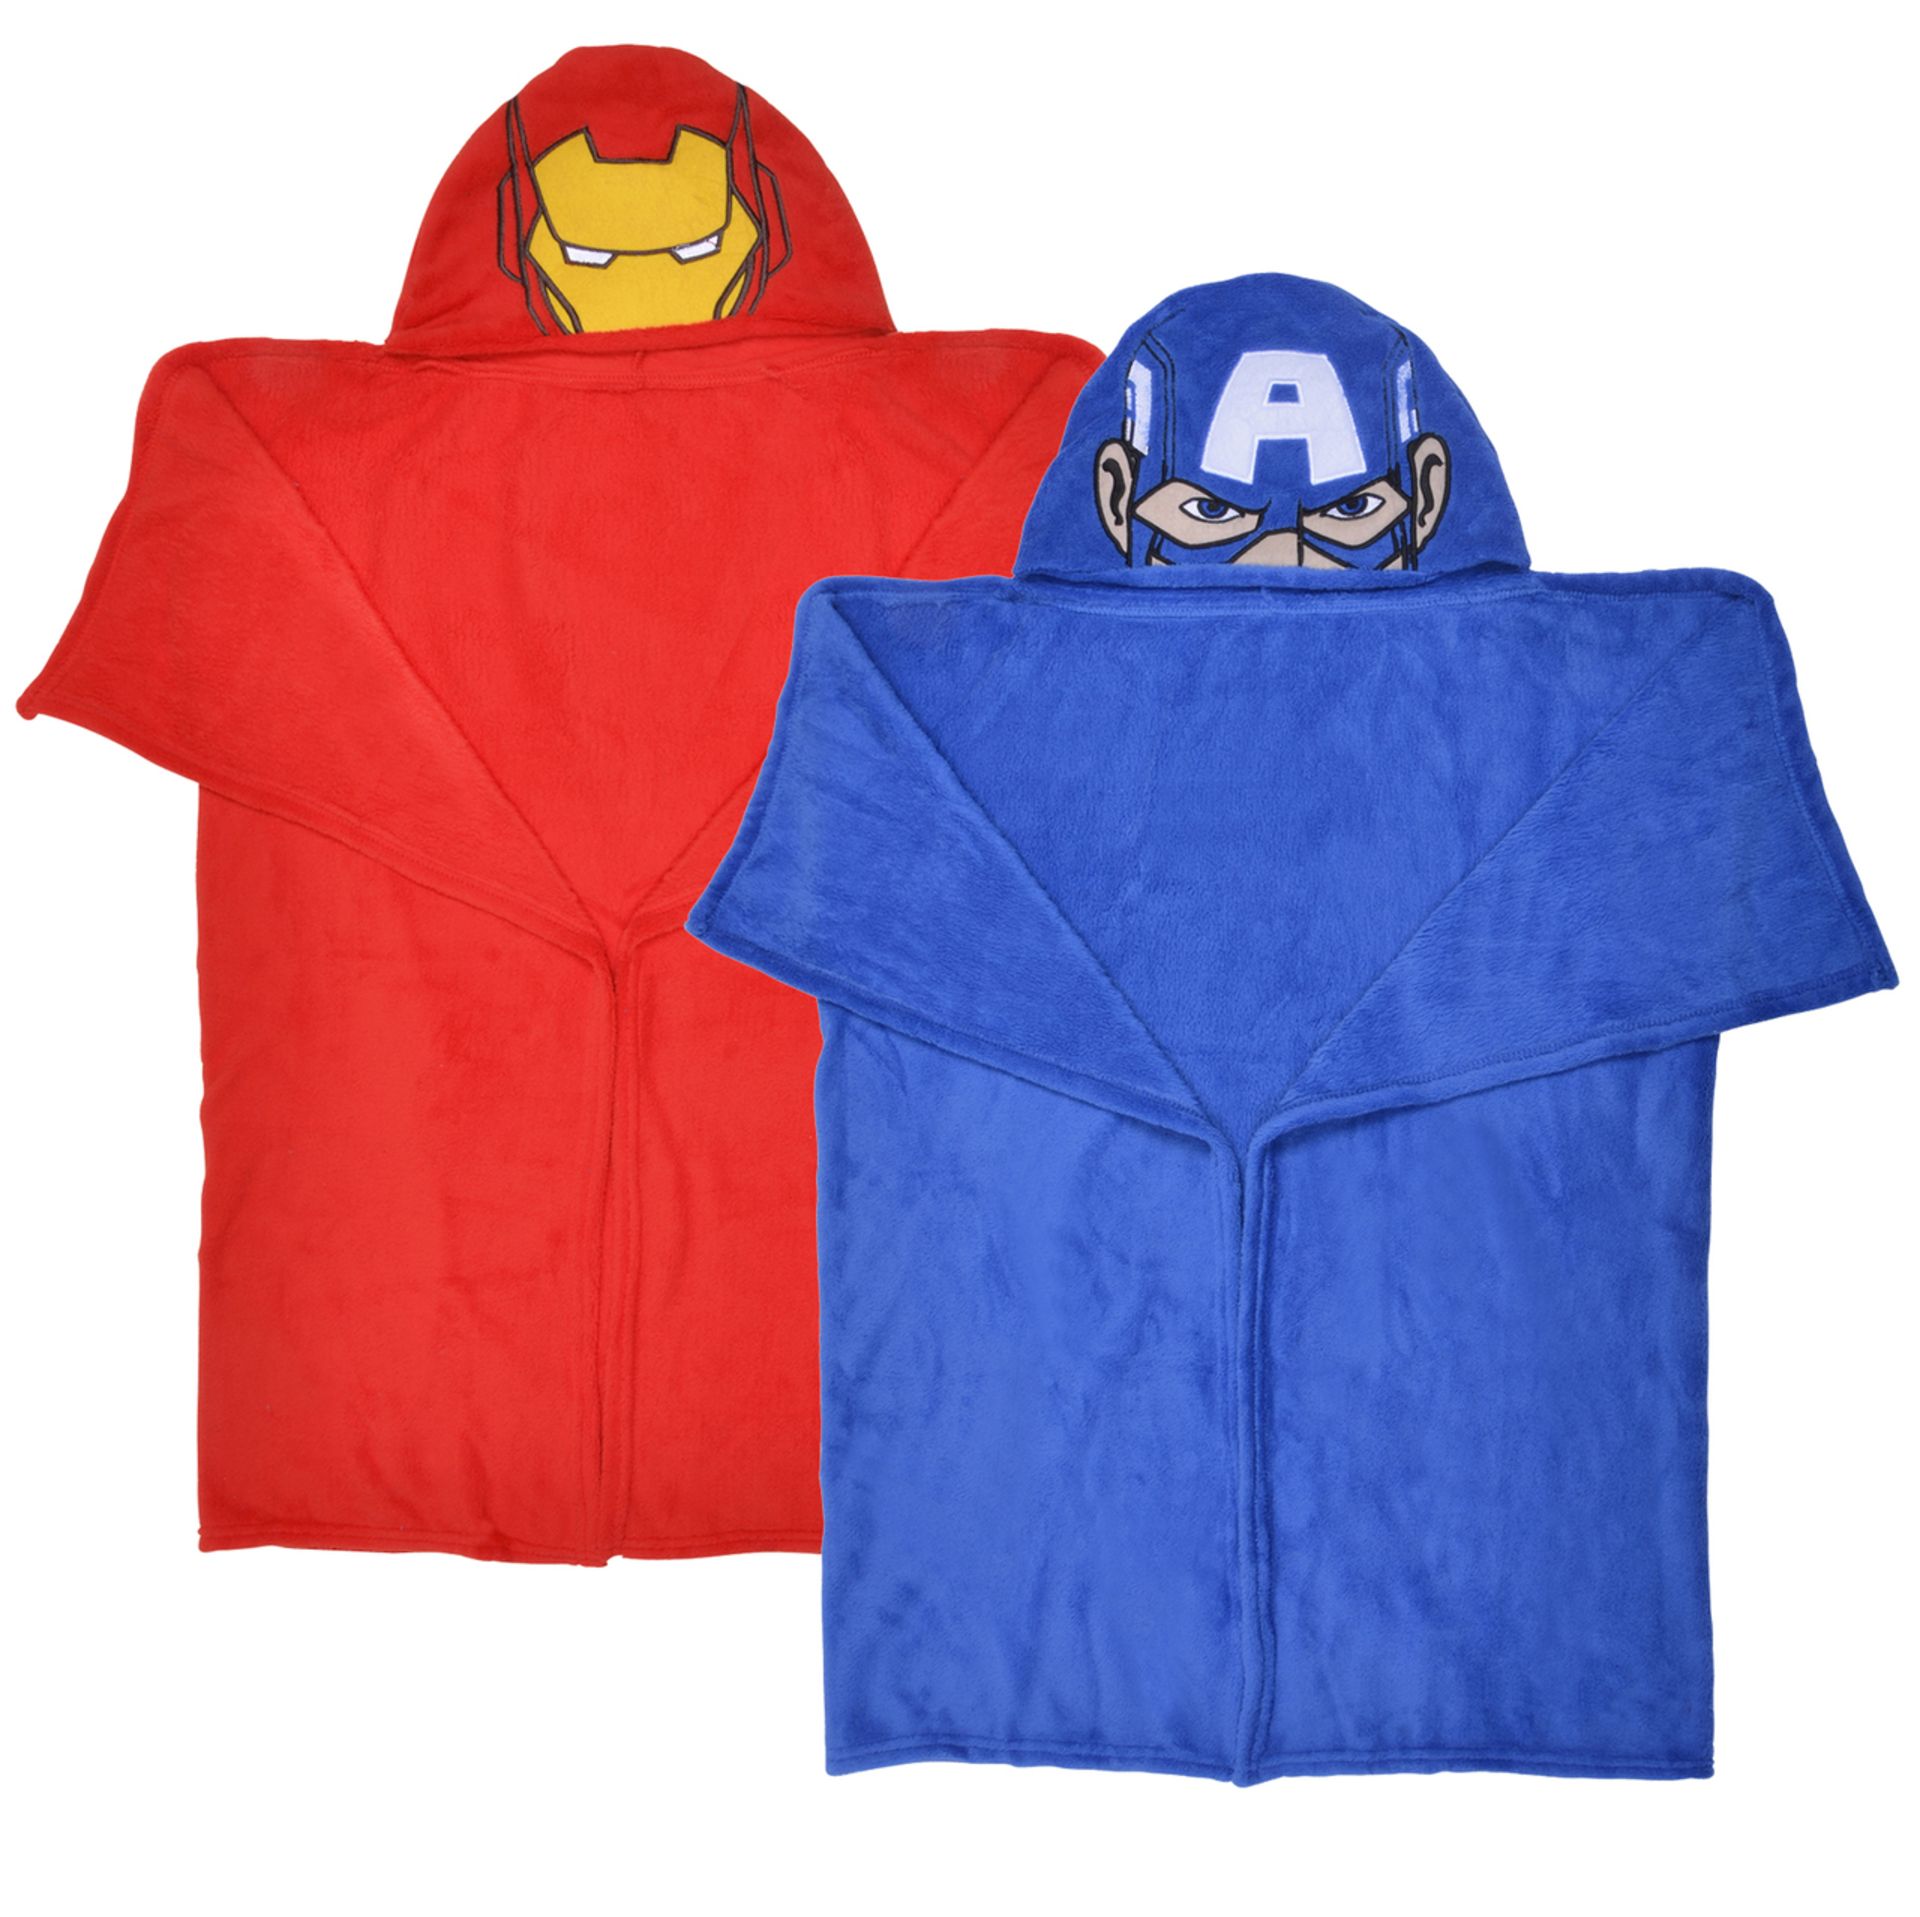 100pcs Brand new Sealed Marvel Captain America & Iron man Cuddle Blanket with hood